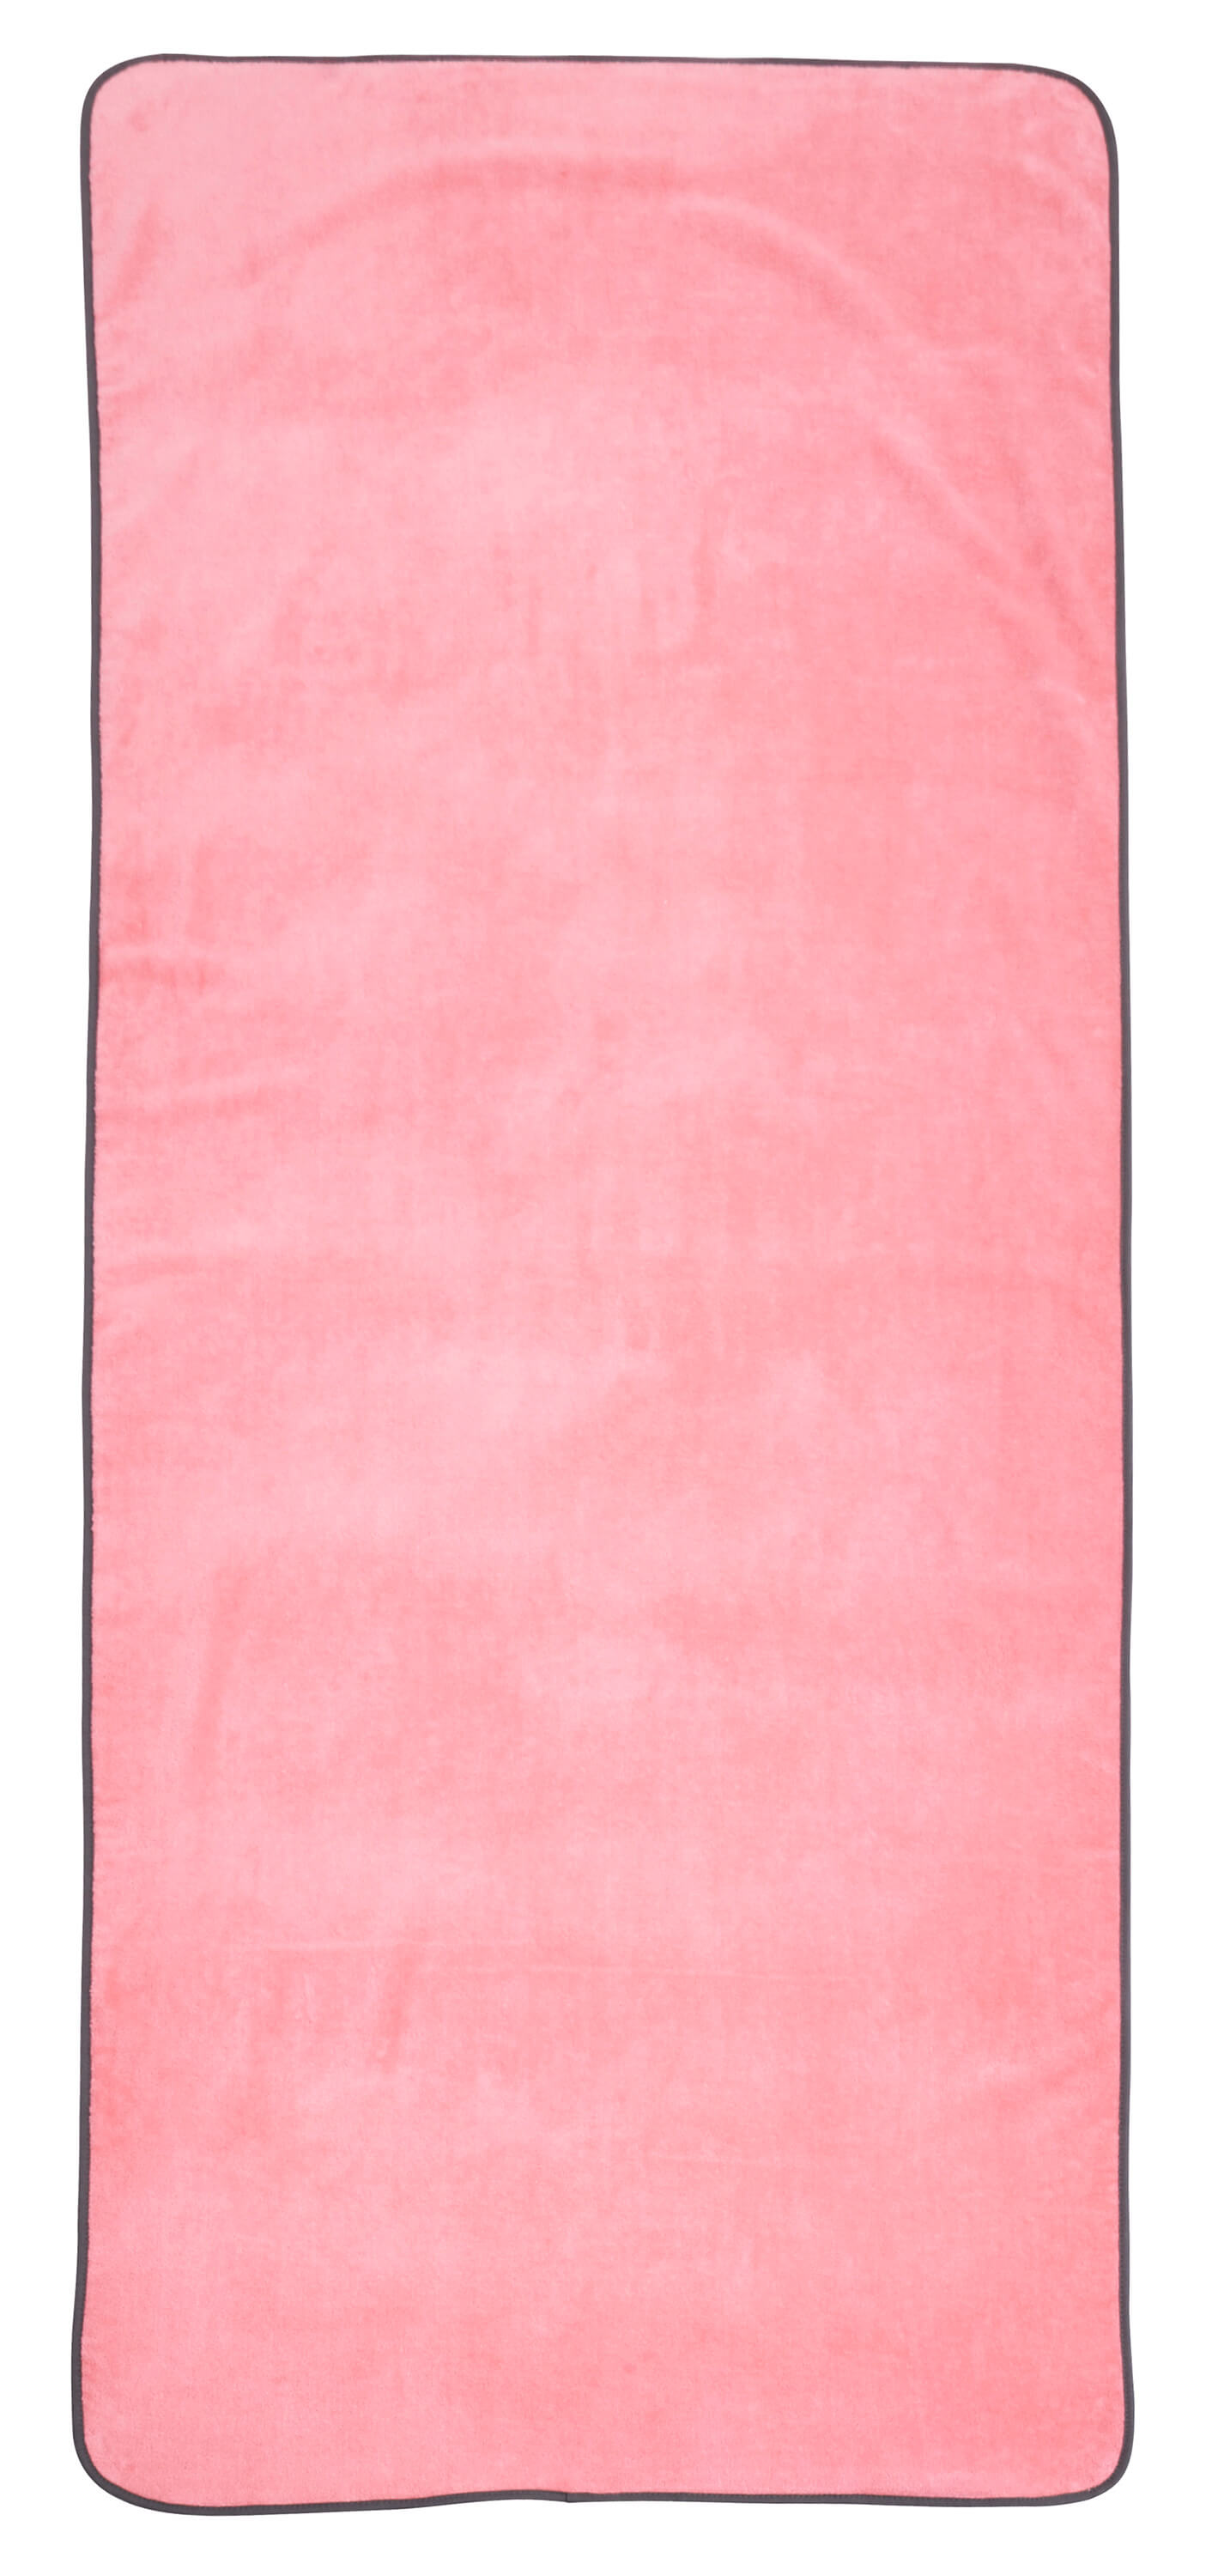 Полотенце для сауны Sauna Blossom ☞ Размер: 80 x 200 см